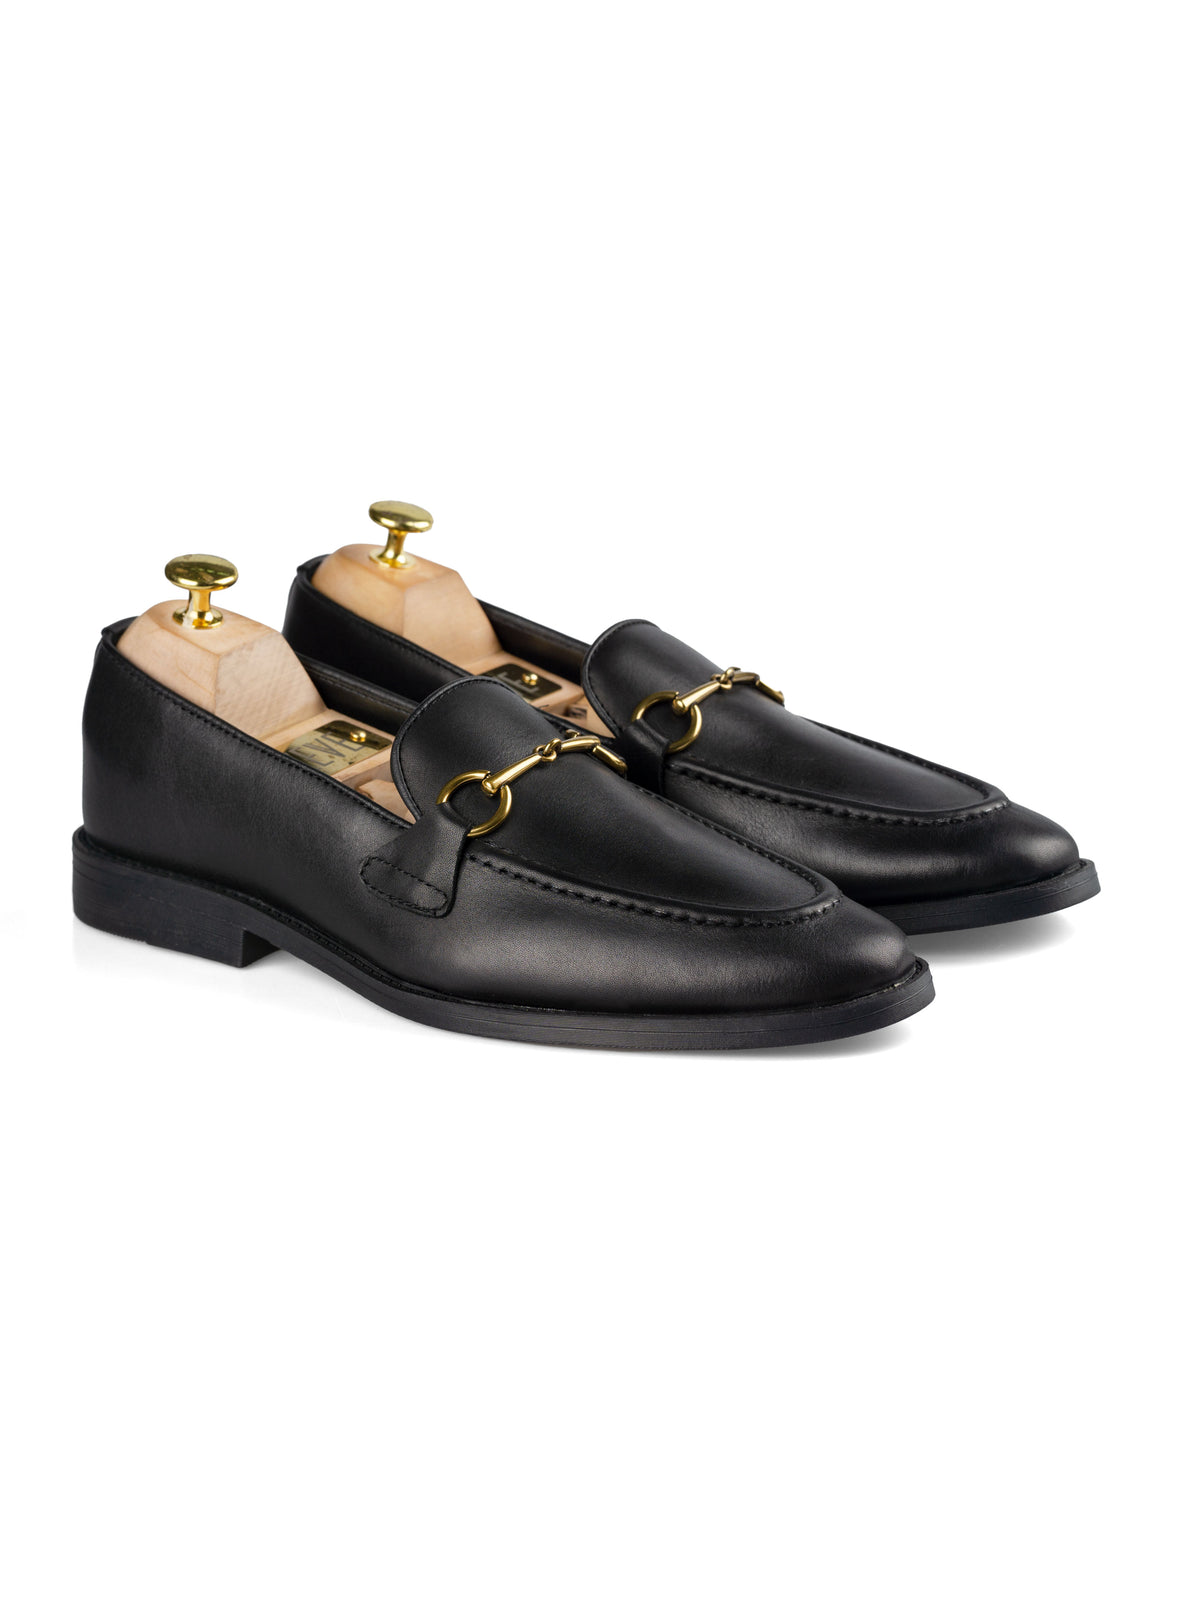 Horsebit Buckle Loafer - Solid Black Leather (Flexi-Sole) | Zeve Shoes